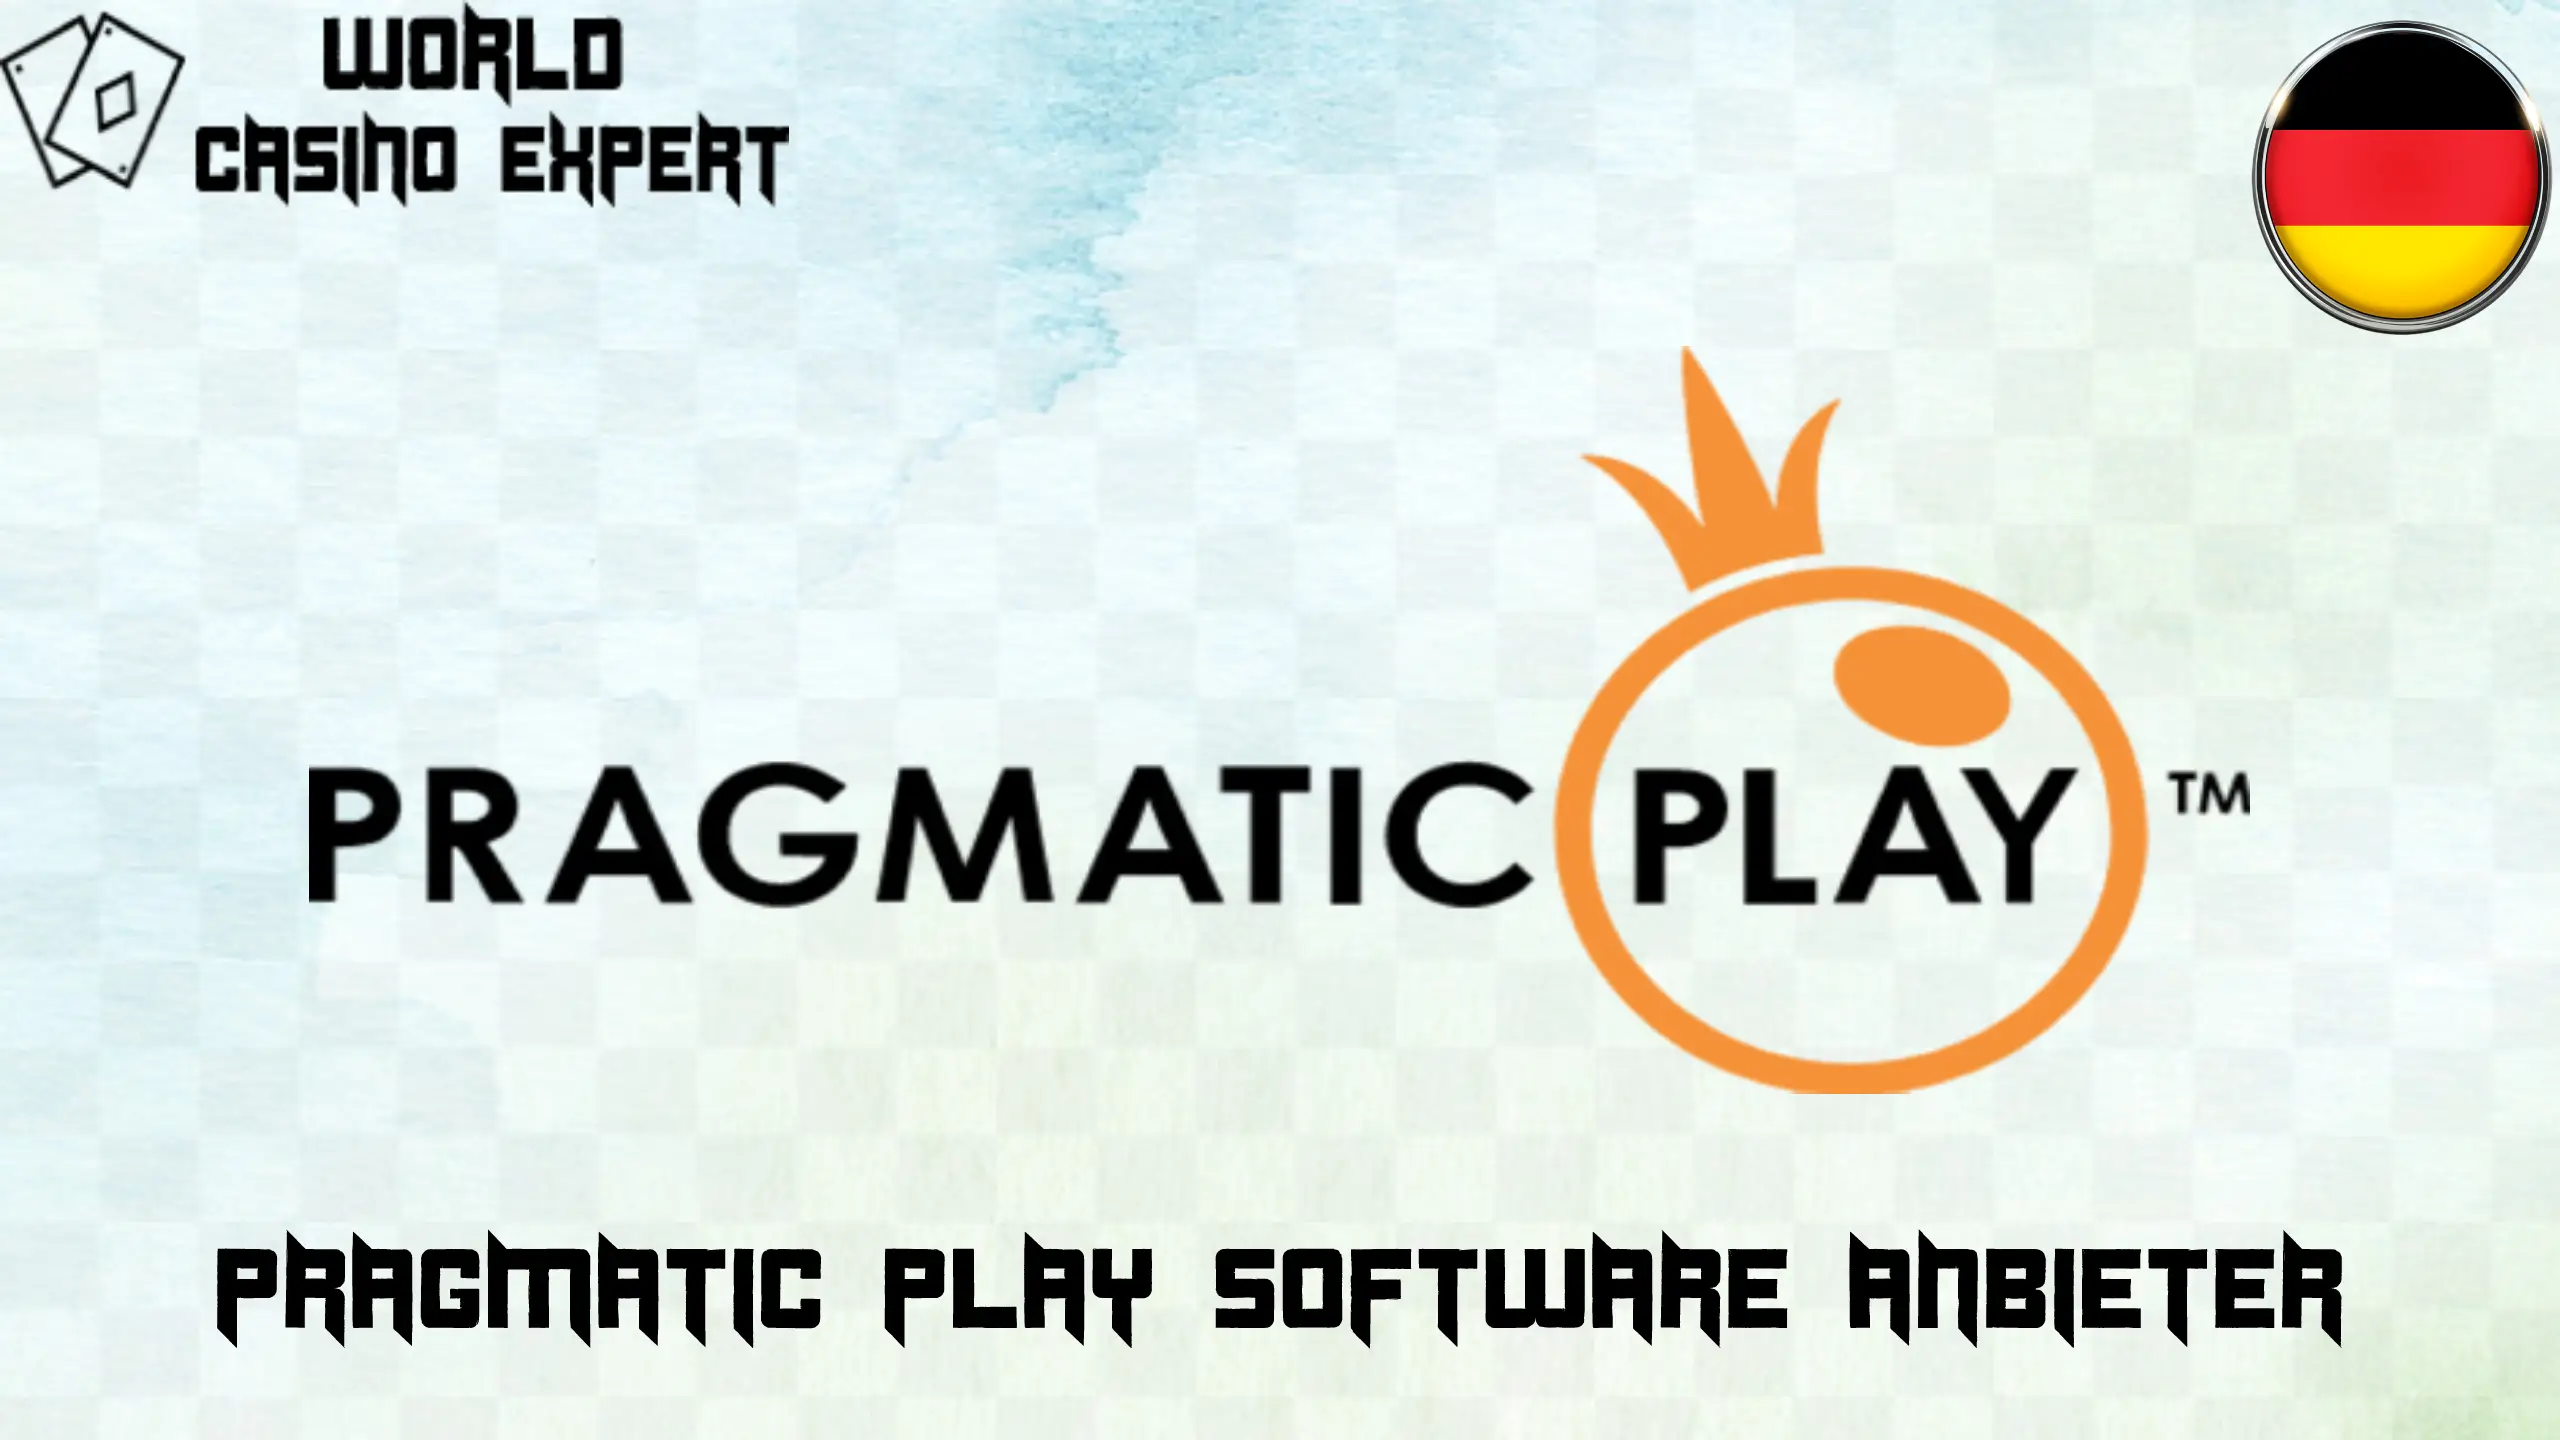 Pragmatic Play Software Anbieter | World Casino Expert Deutschland